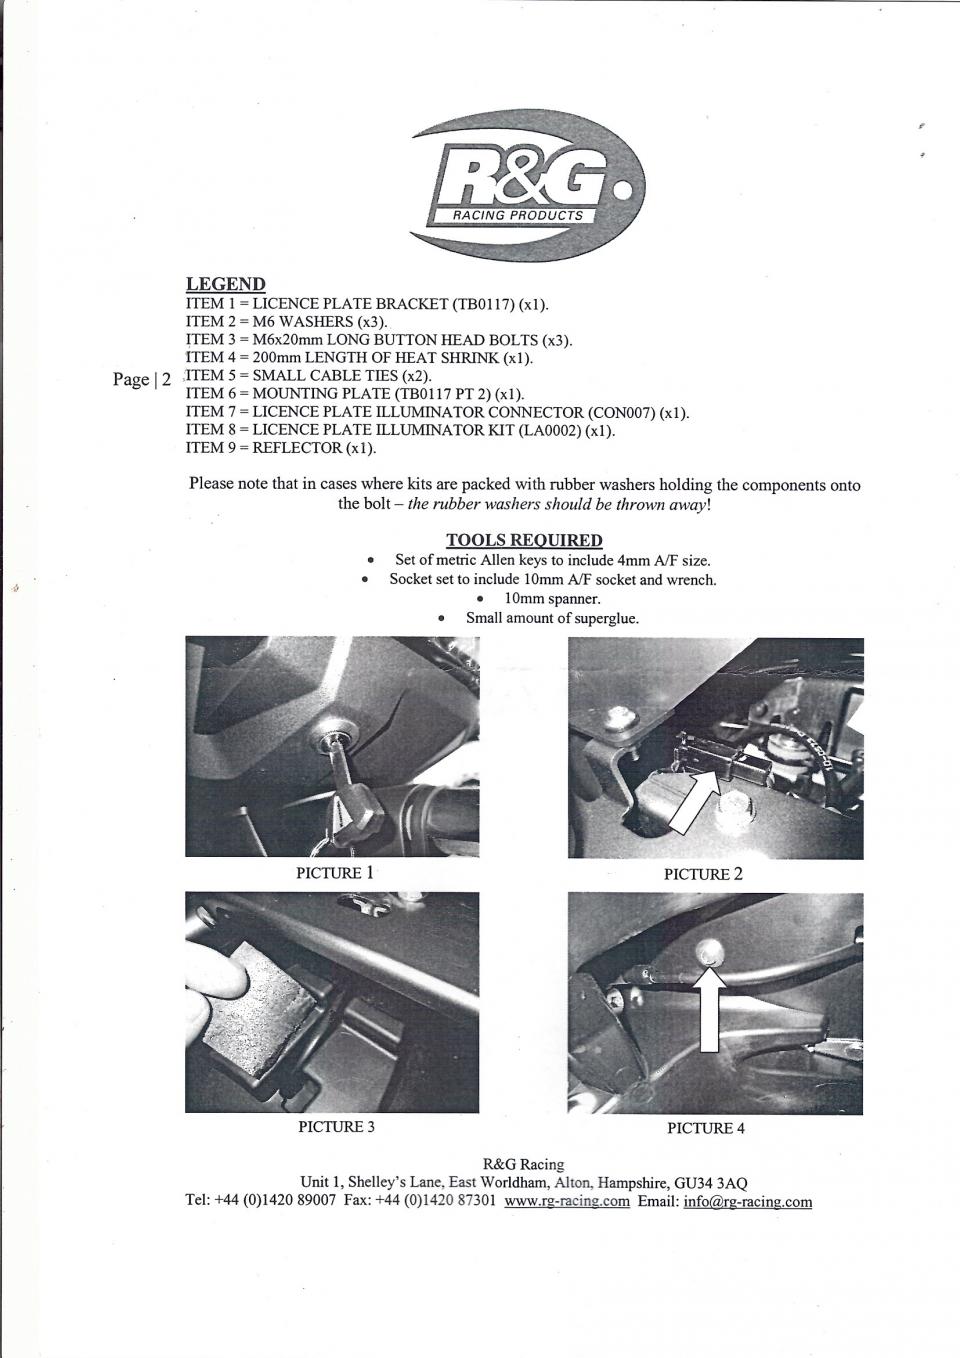 Support plaque immatriculation R&G moto Kawasaki KLZ Versys 1000 LP0117BK Leds